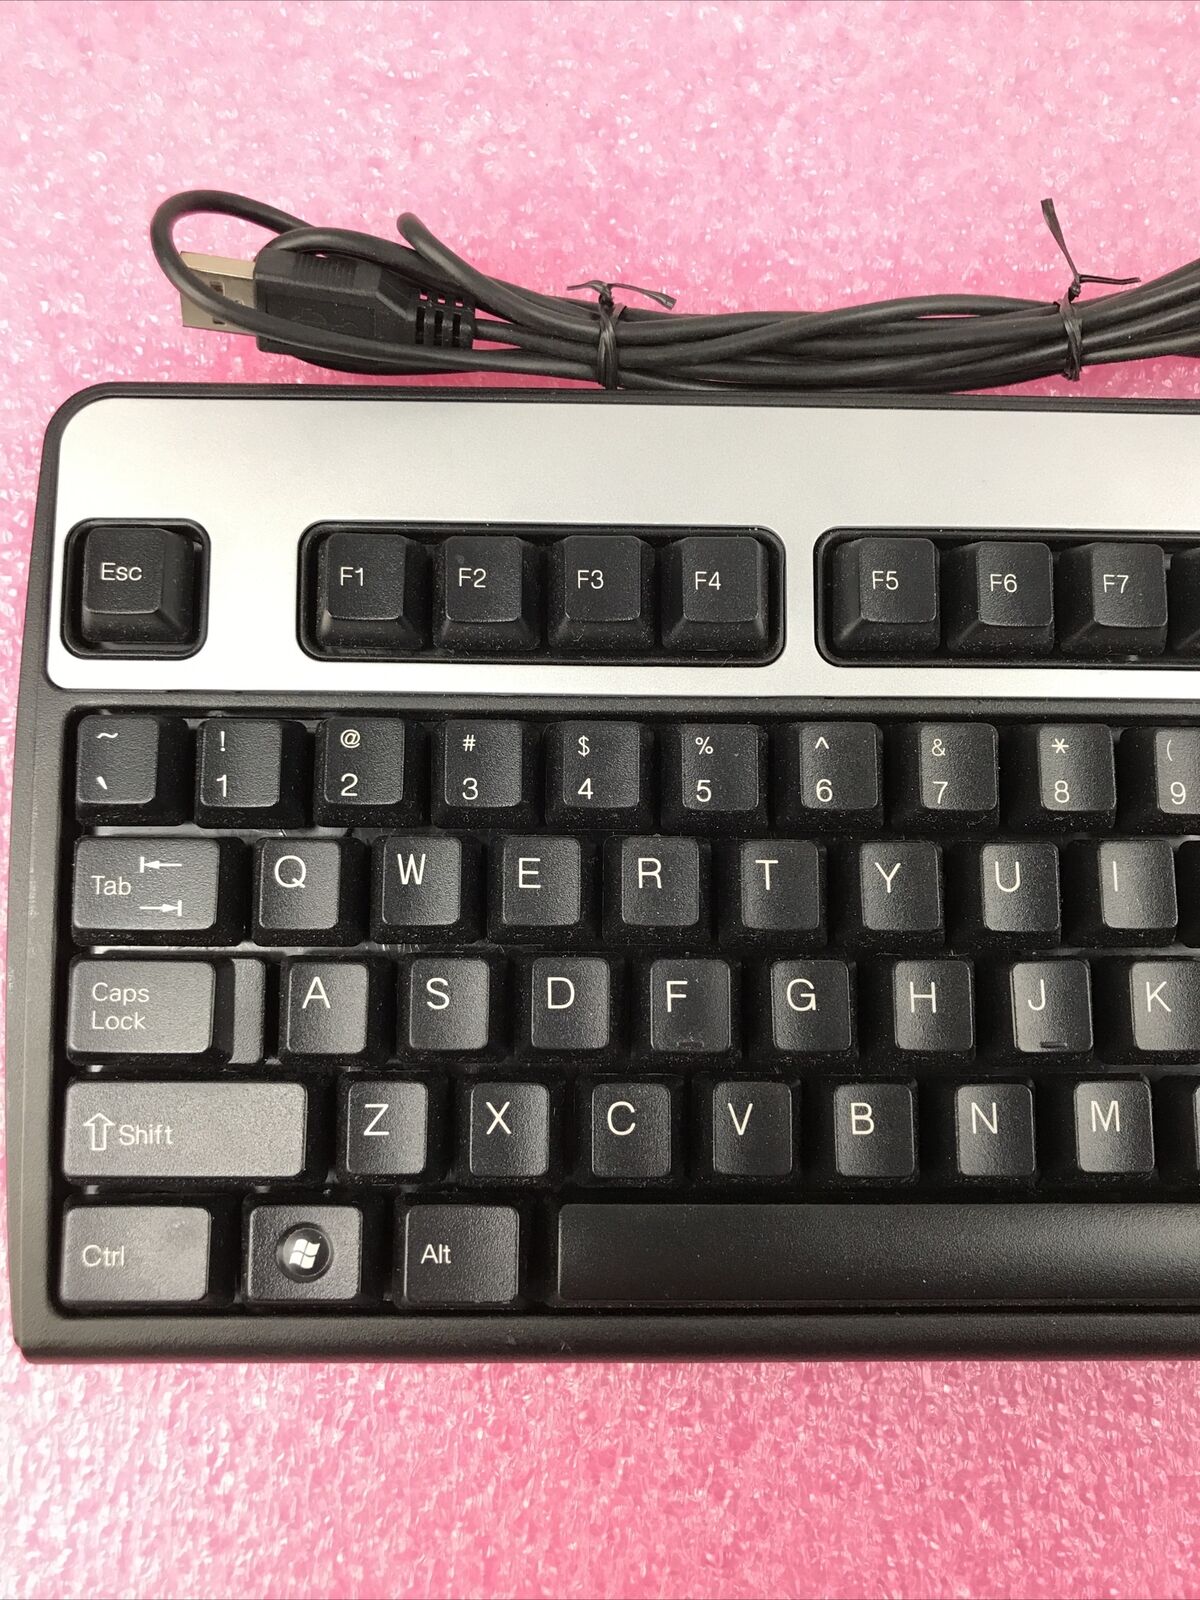 hp computer keyboard layout